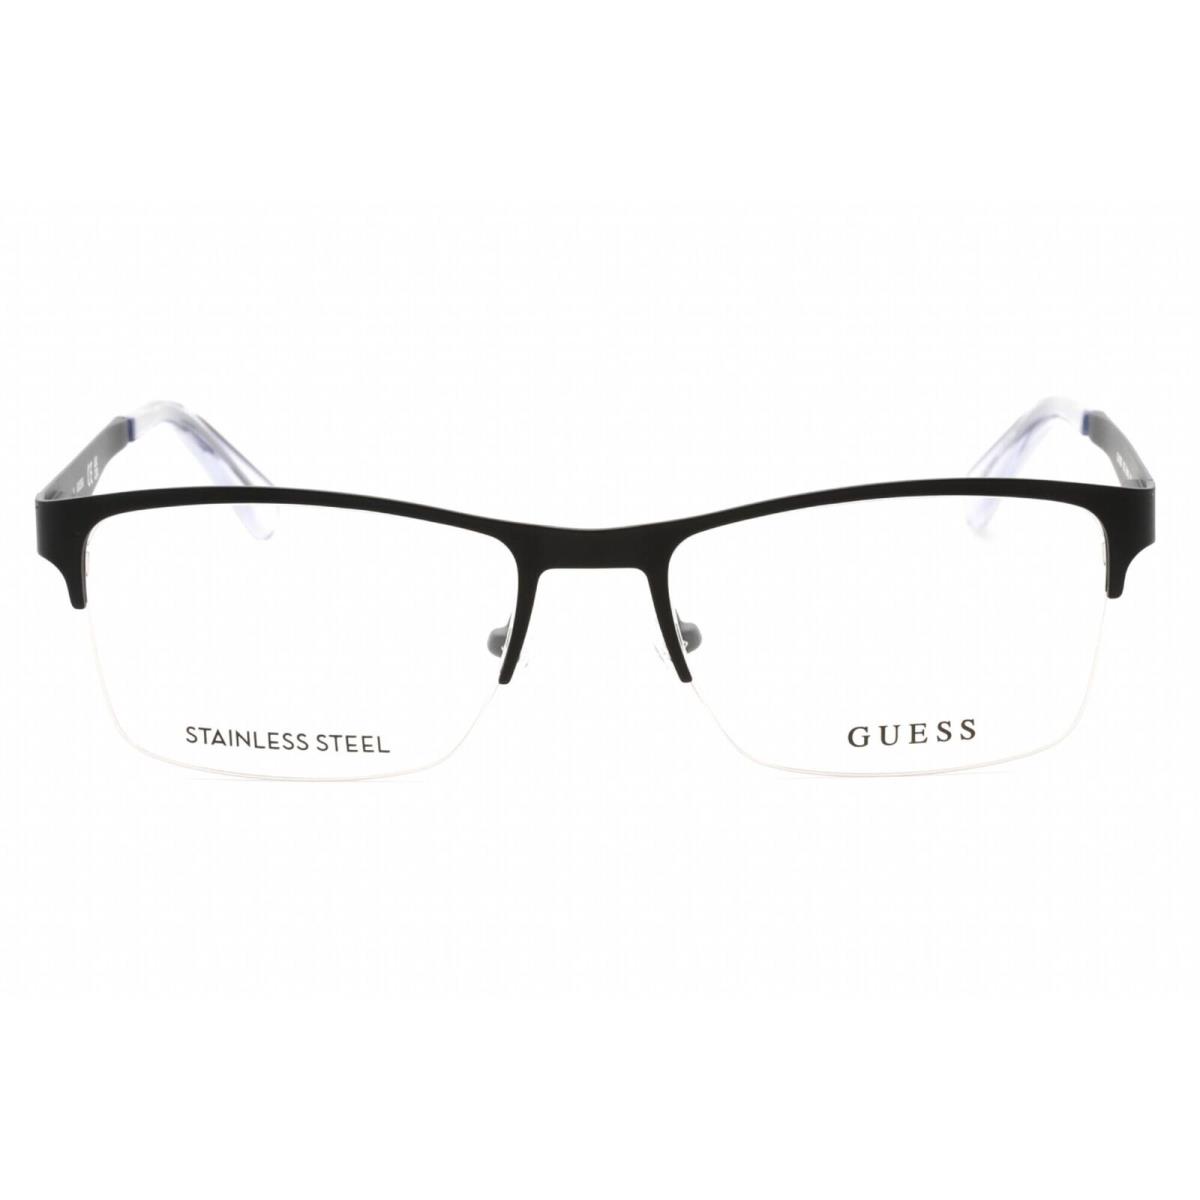 Guess Men`s Eyeglasses Clear Demo Lens Matte Black Rectangular Frame GU1936 002